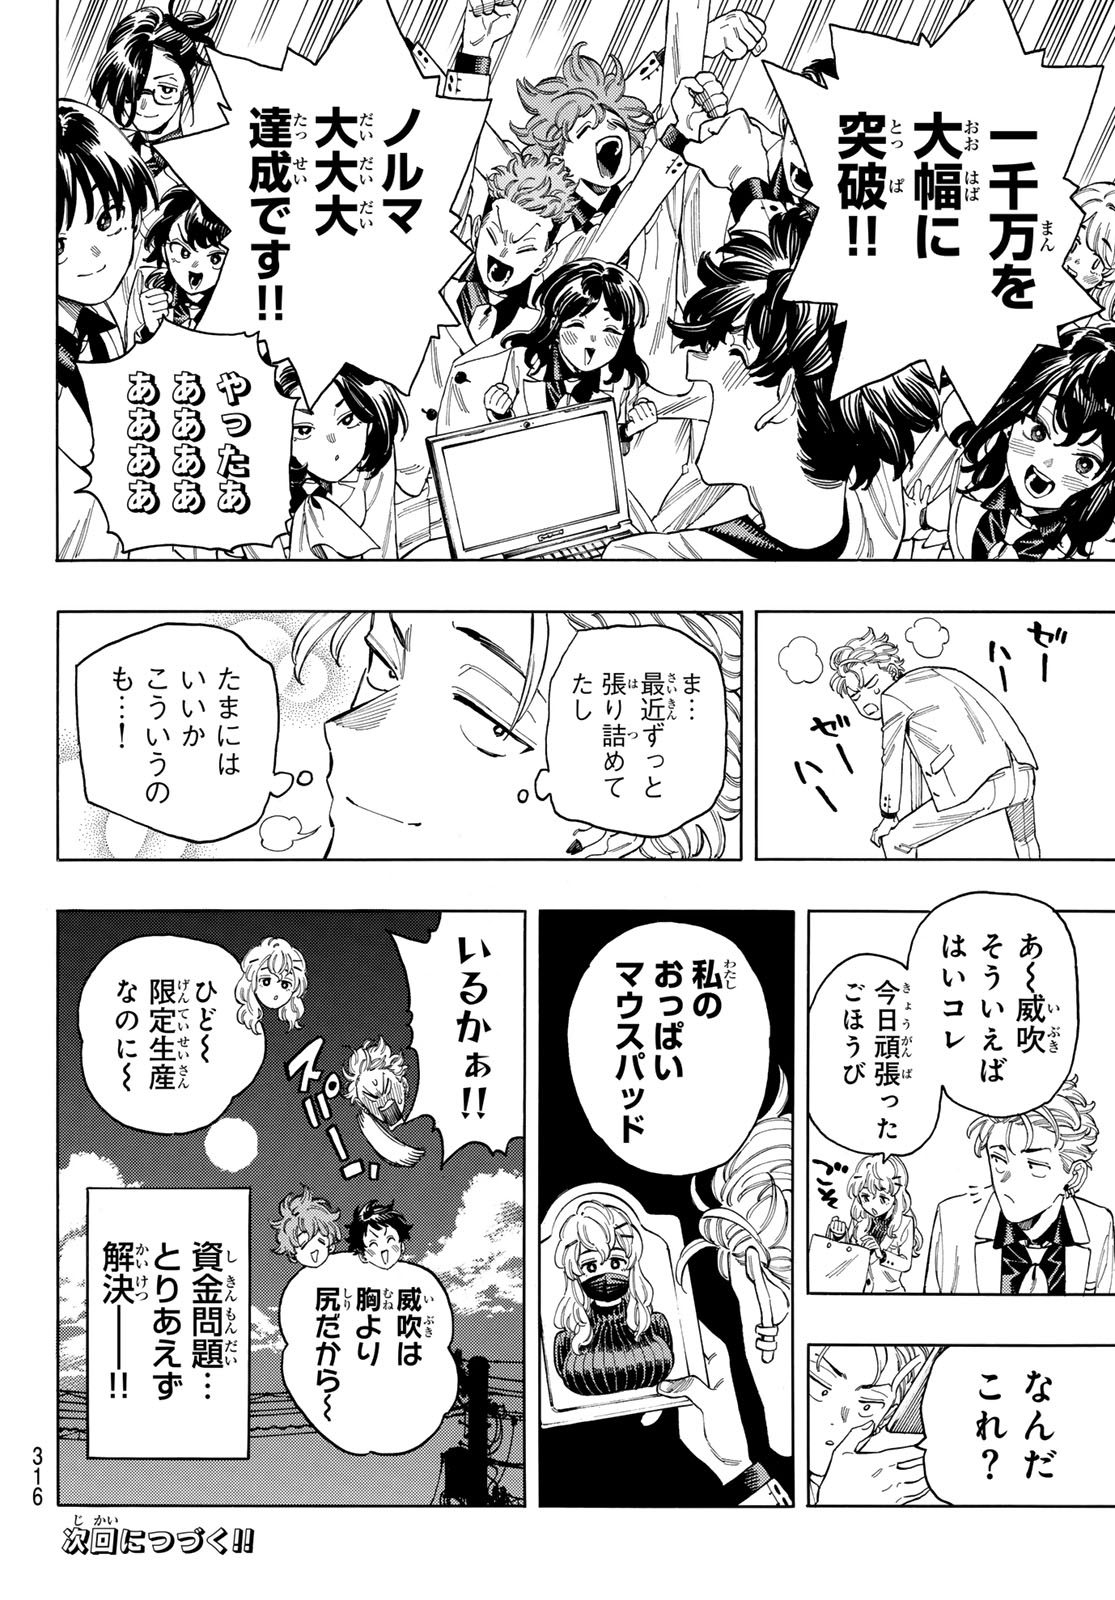 Akabane Honeko no Bodyguard - Chapter 82 - Page 20